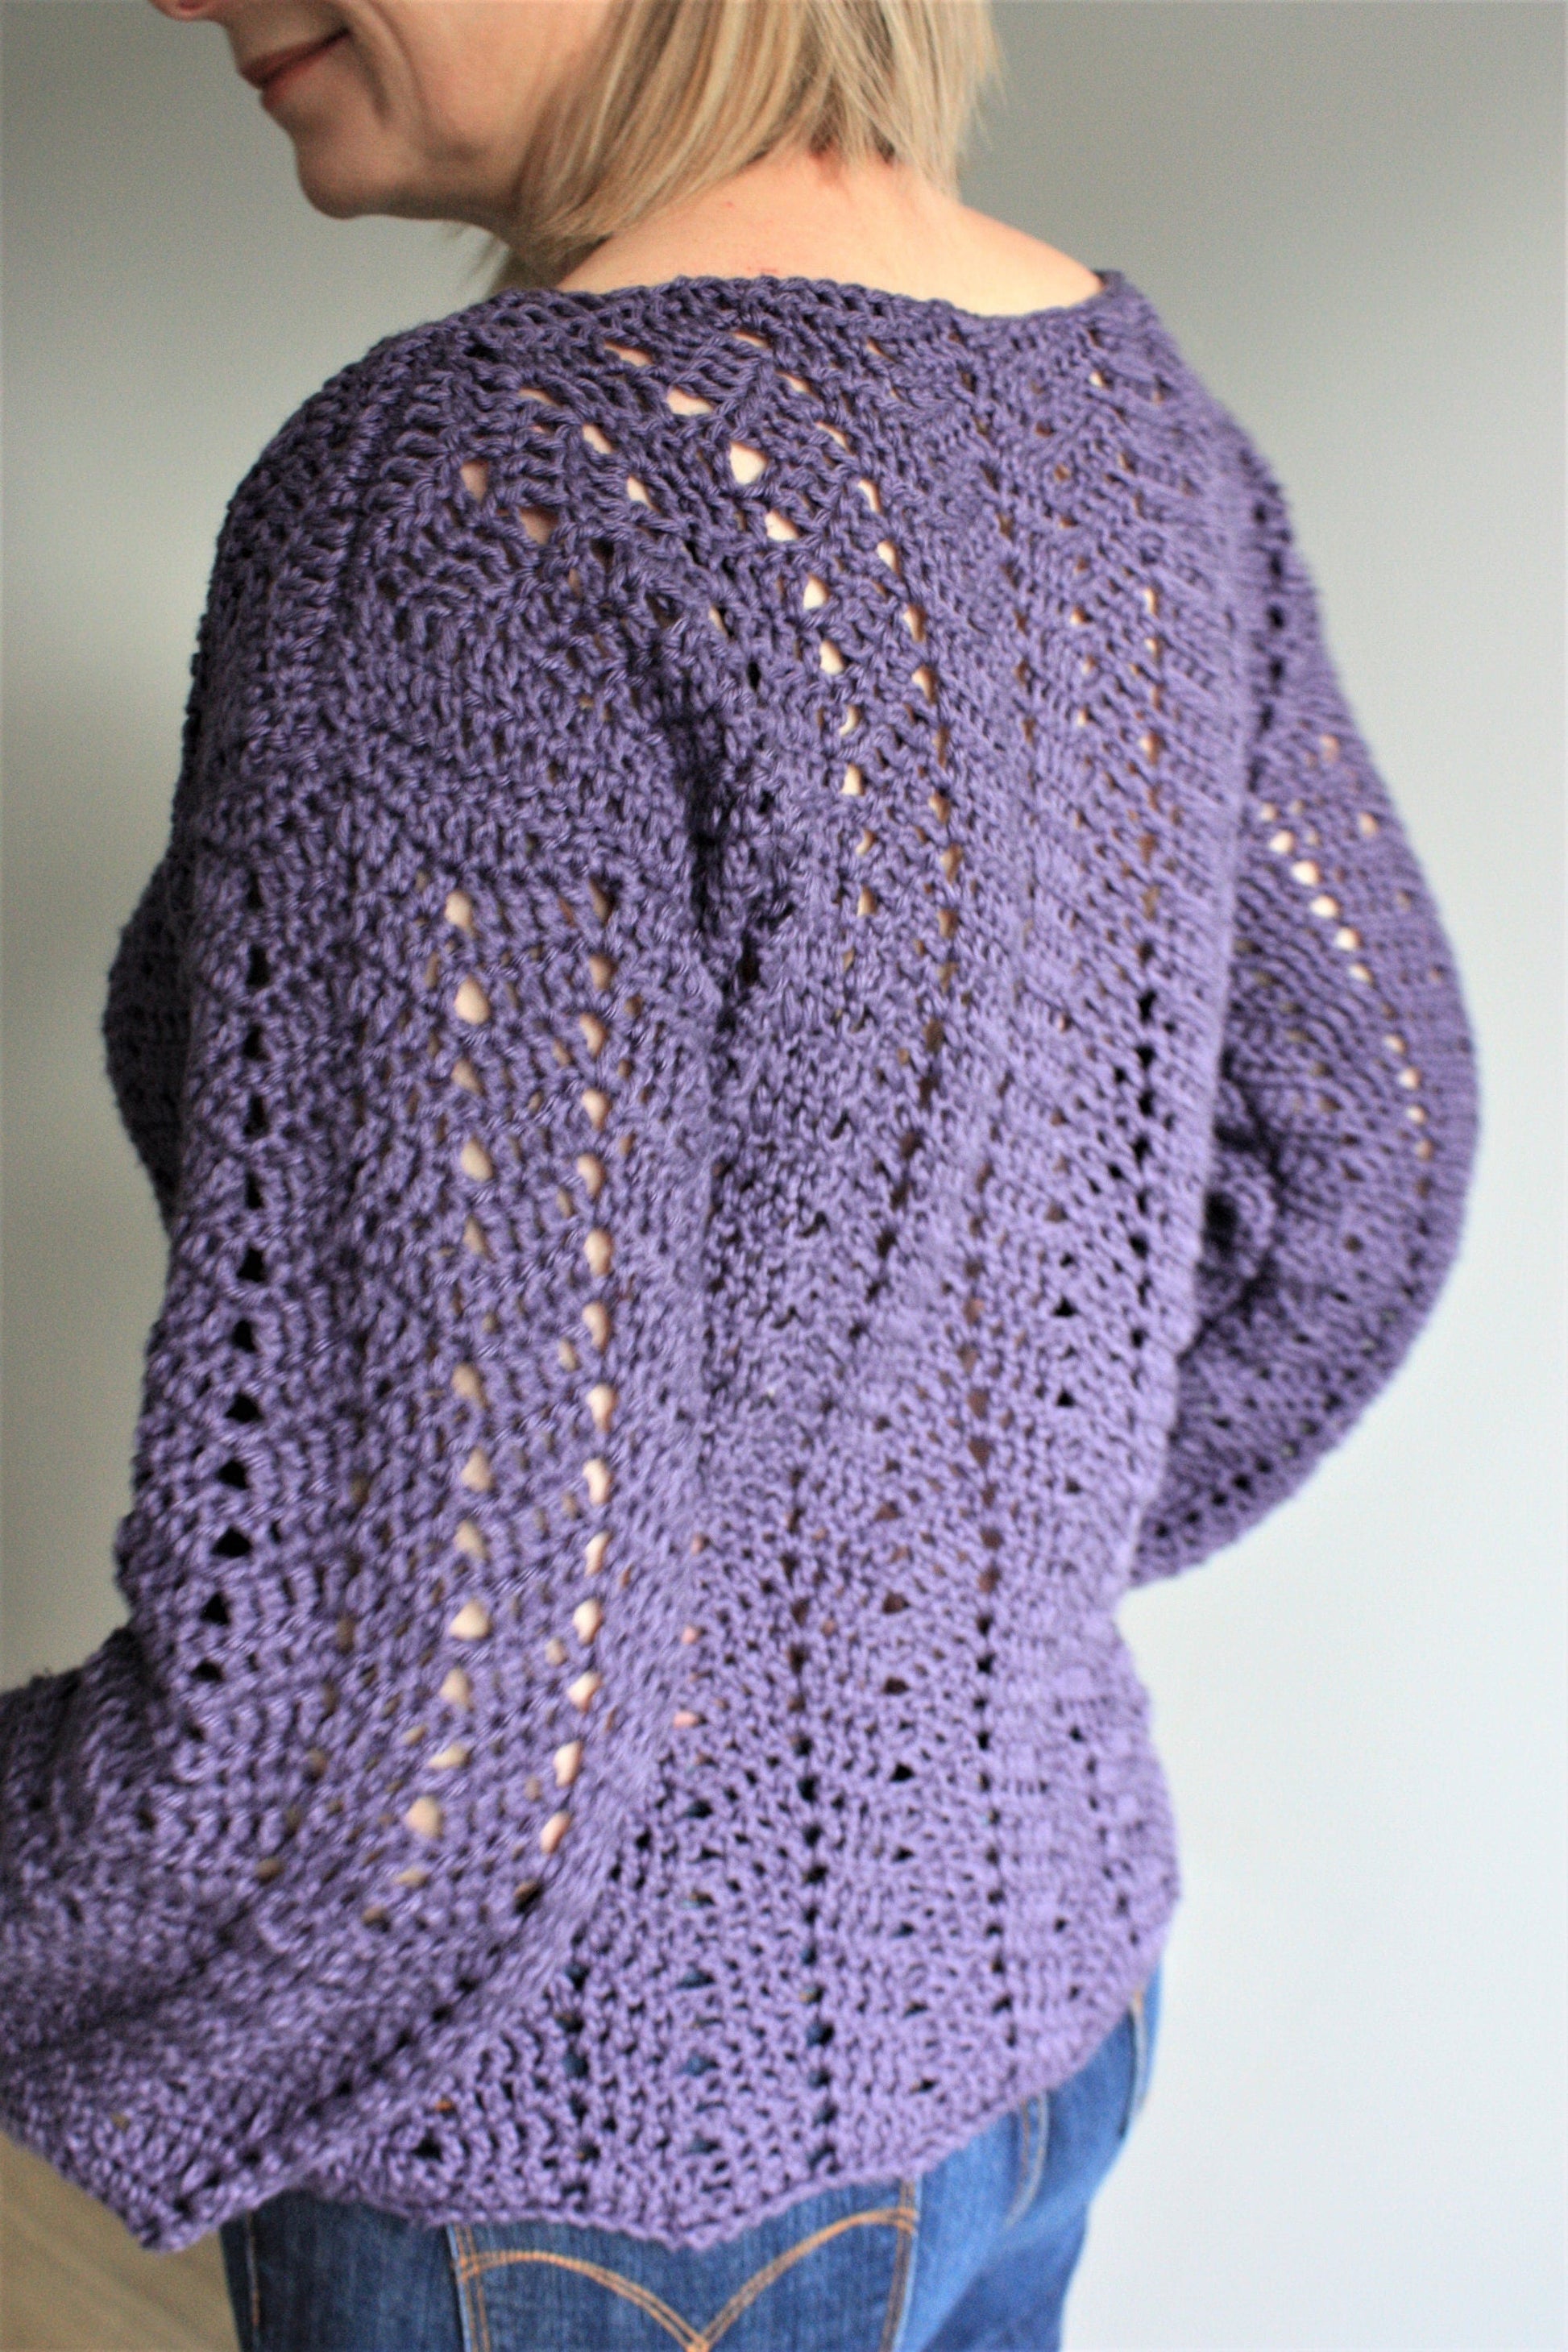 Crochet Hook 10 mm (N/P-15) Details & Patterns - Easy Crochet Patterns